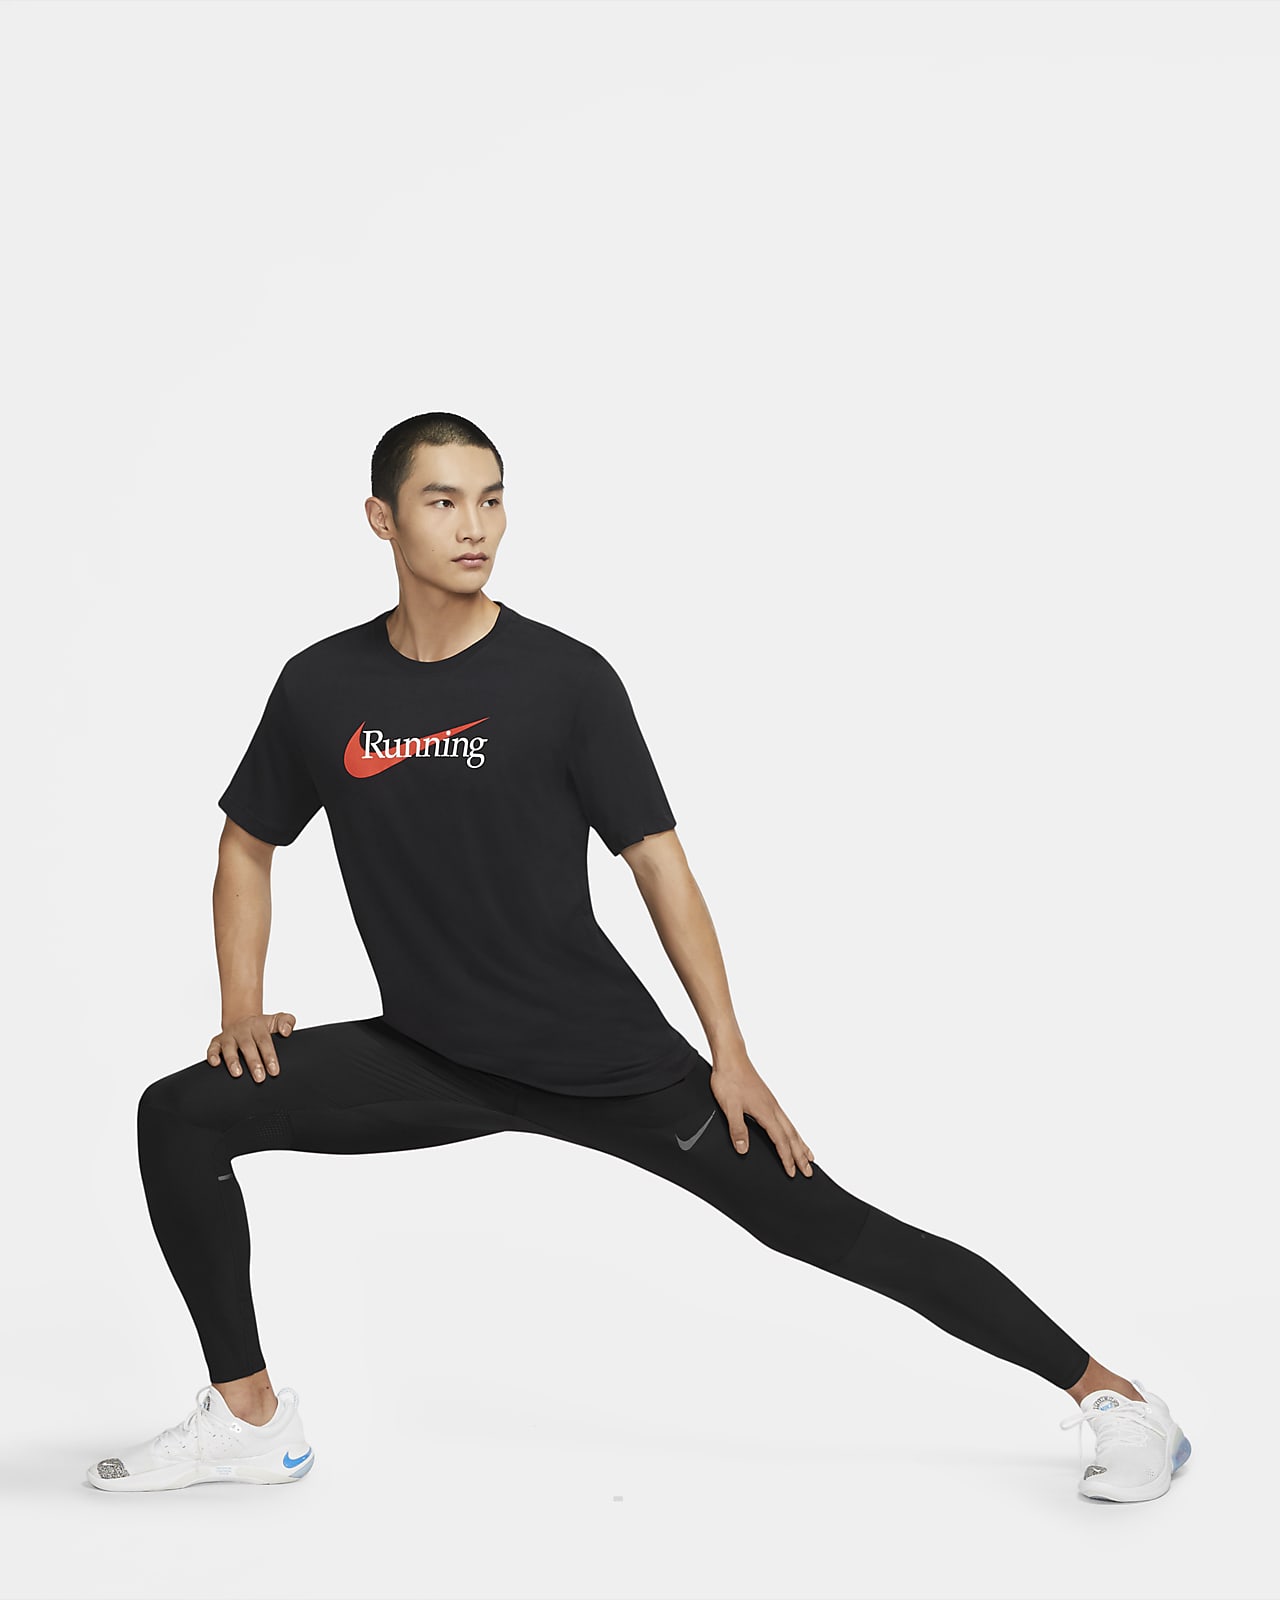 Nike公式 ナイキ スウィフト メンズ ランニングパンツ オンラインストア 通販サイト